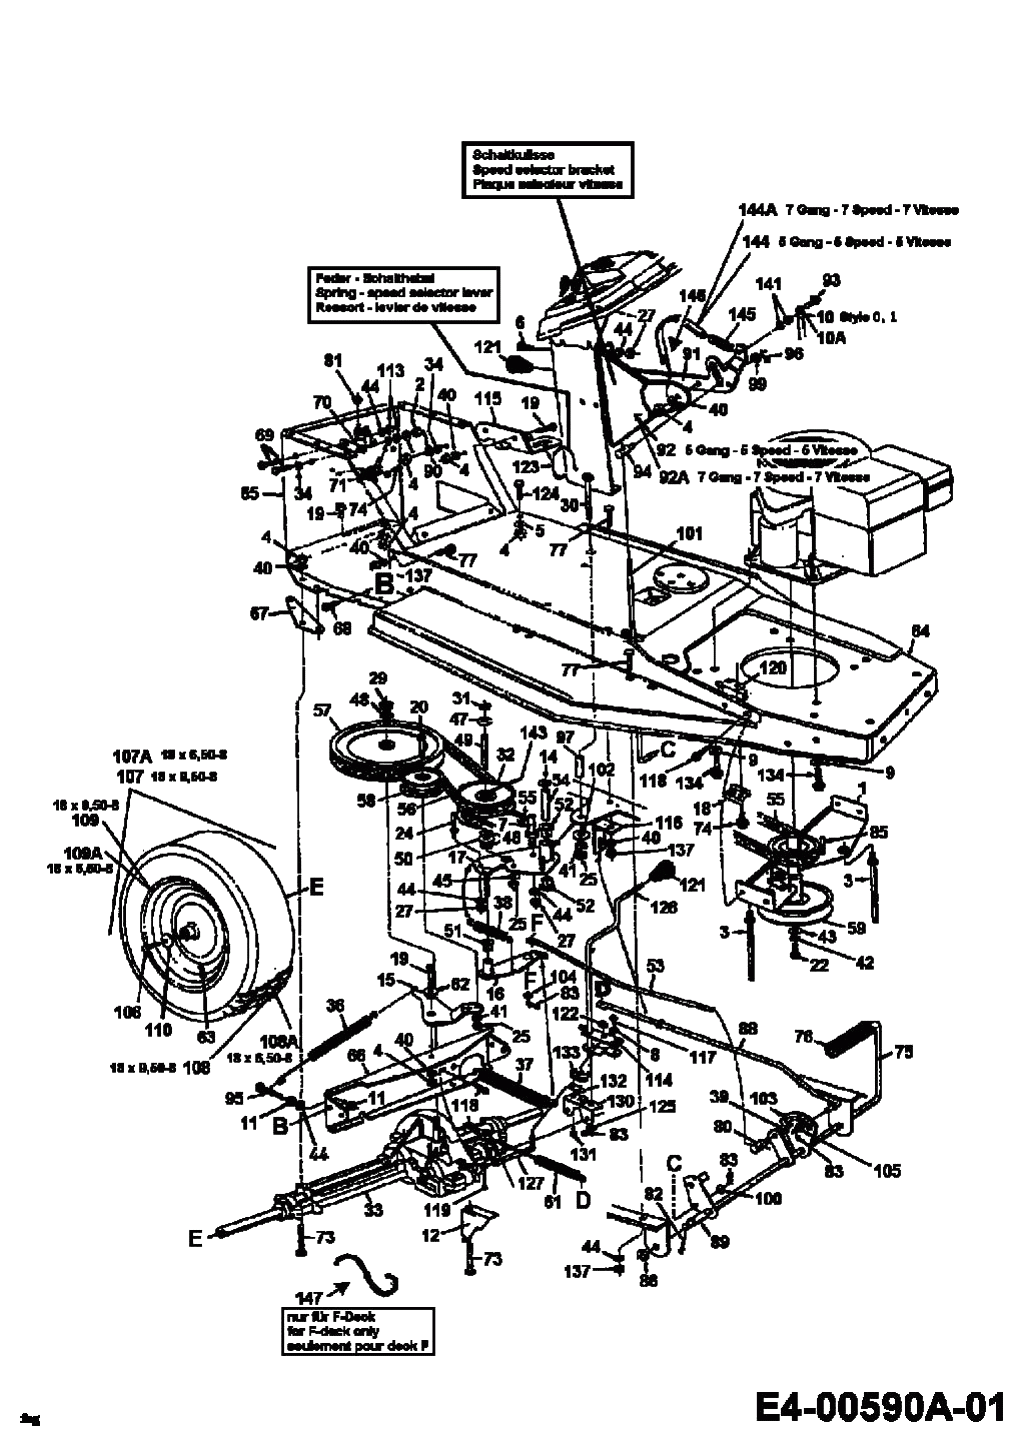 MTD Артикул 13BC451C600 (год выпуска 1998). Система привода, шкив двигателя, педали, задние колеса